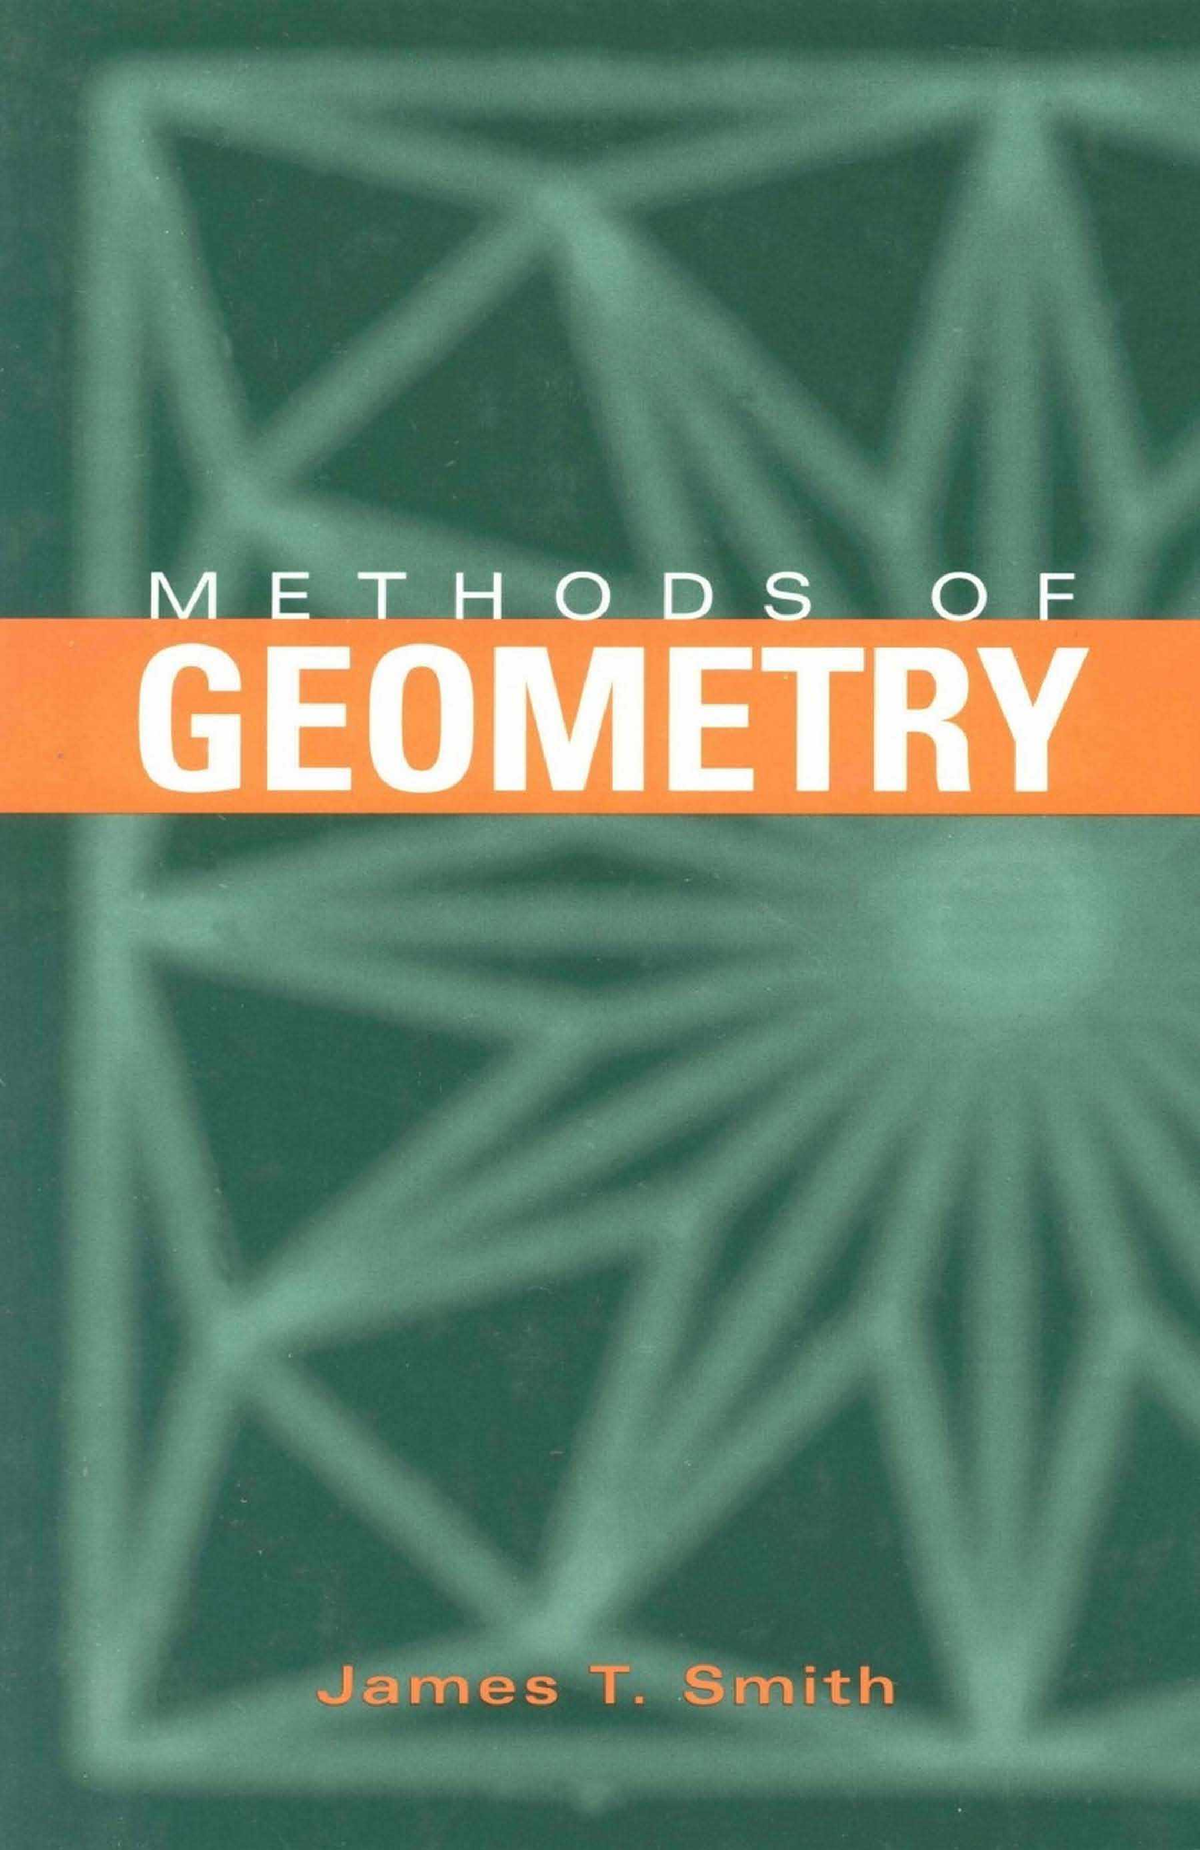 Geometry group